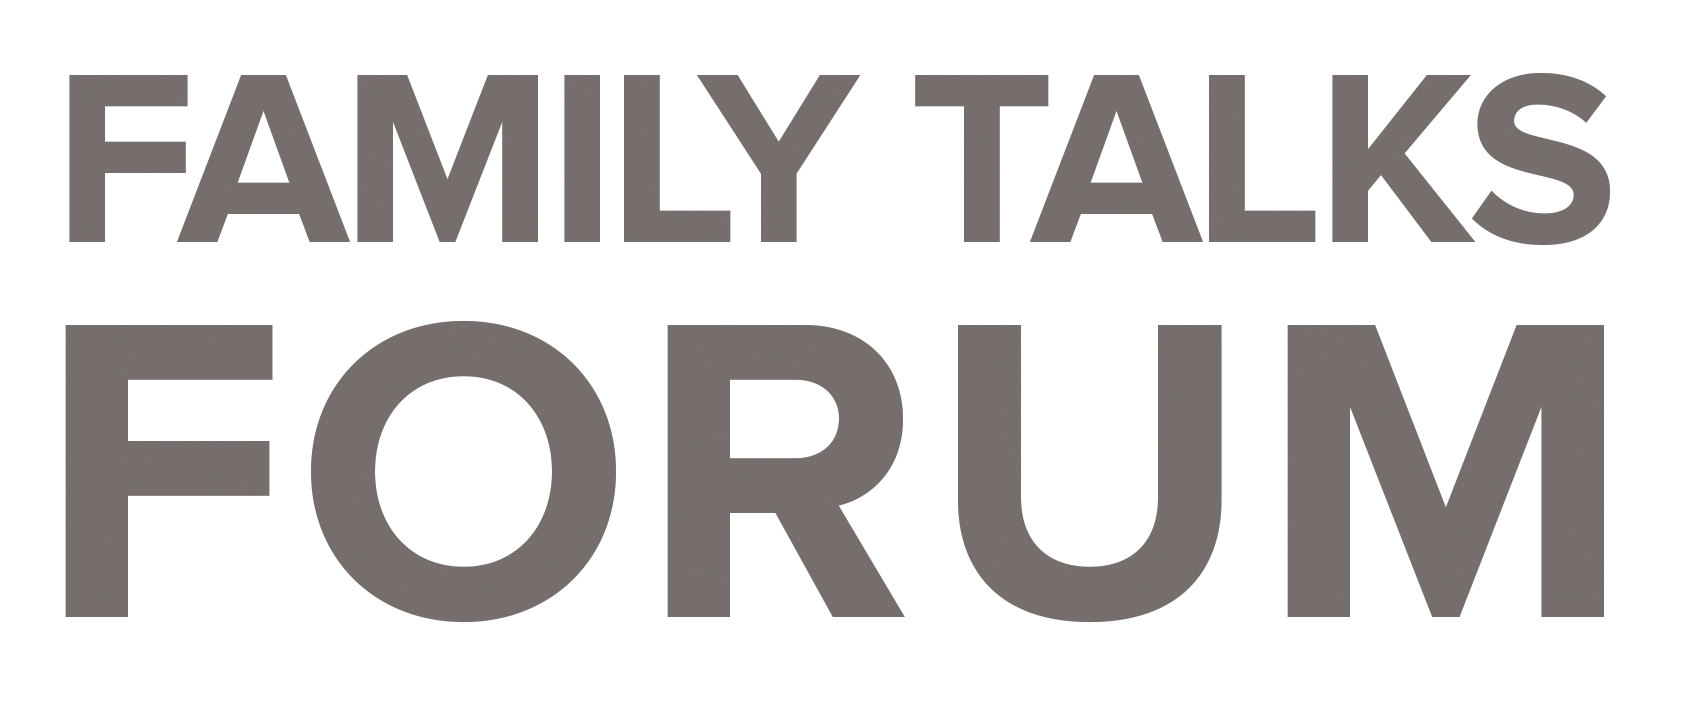 Family talks forum